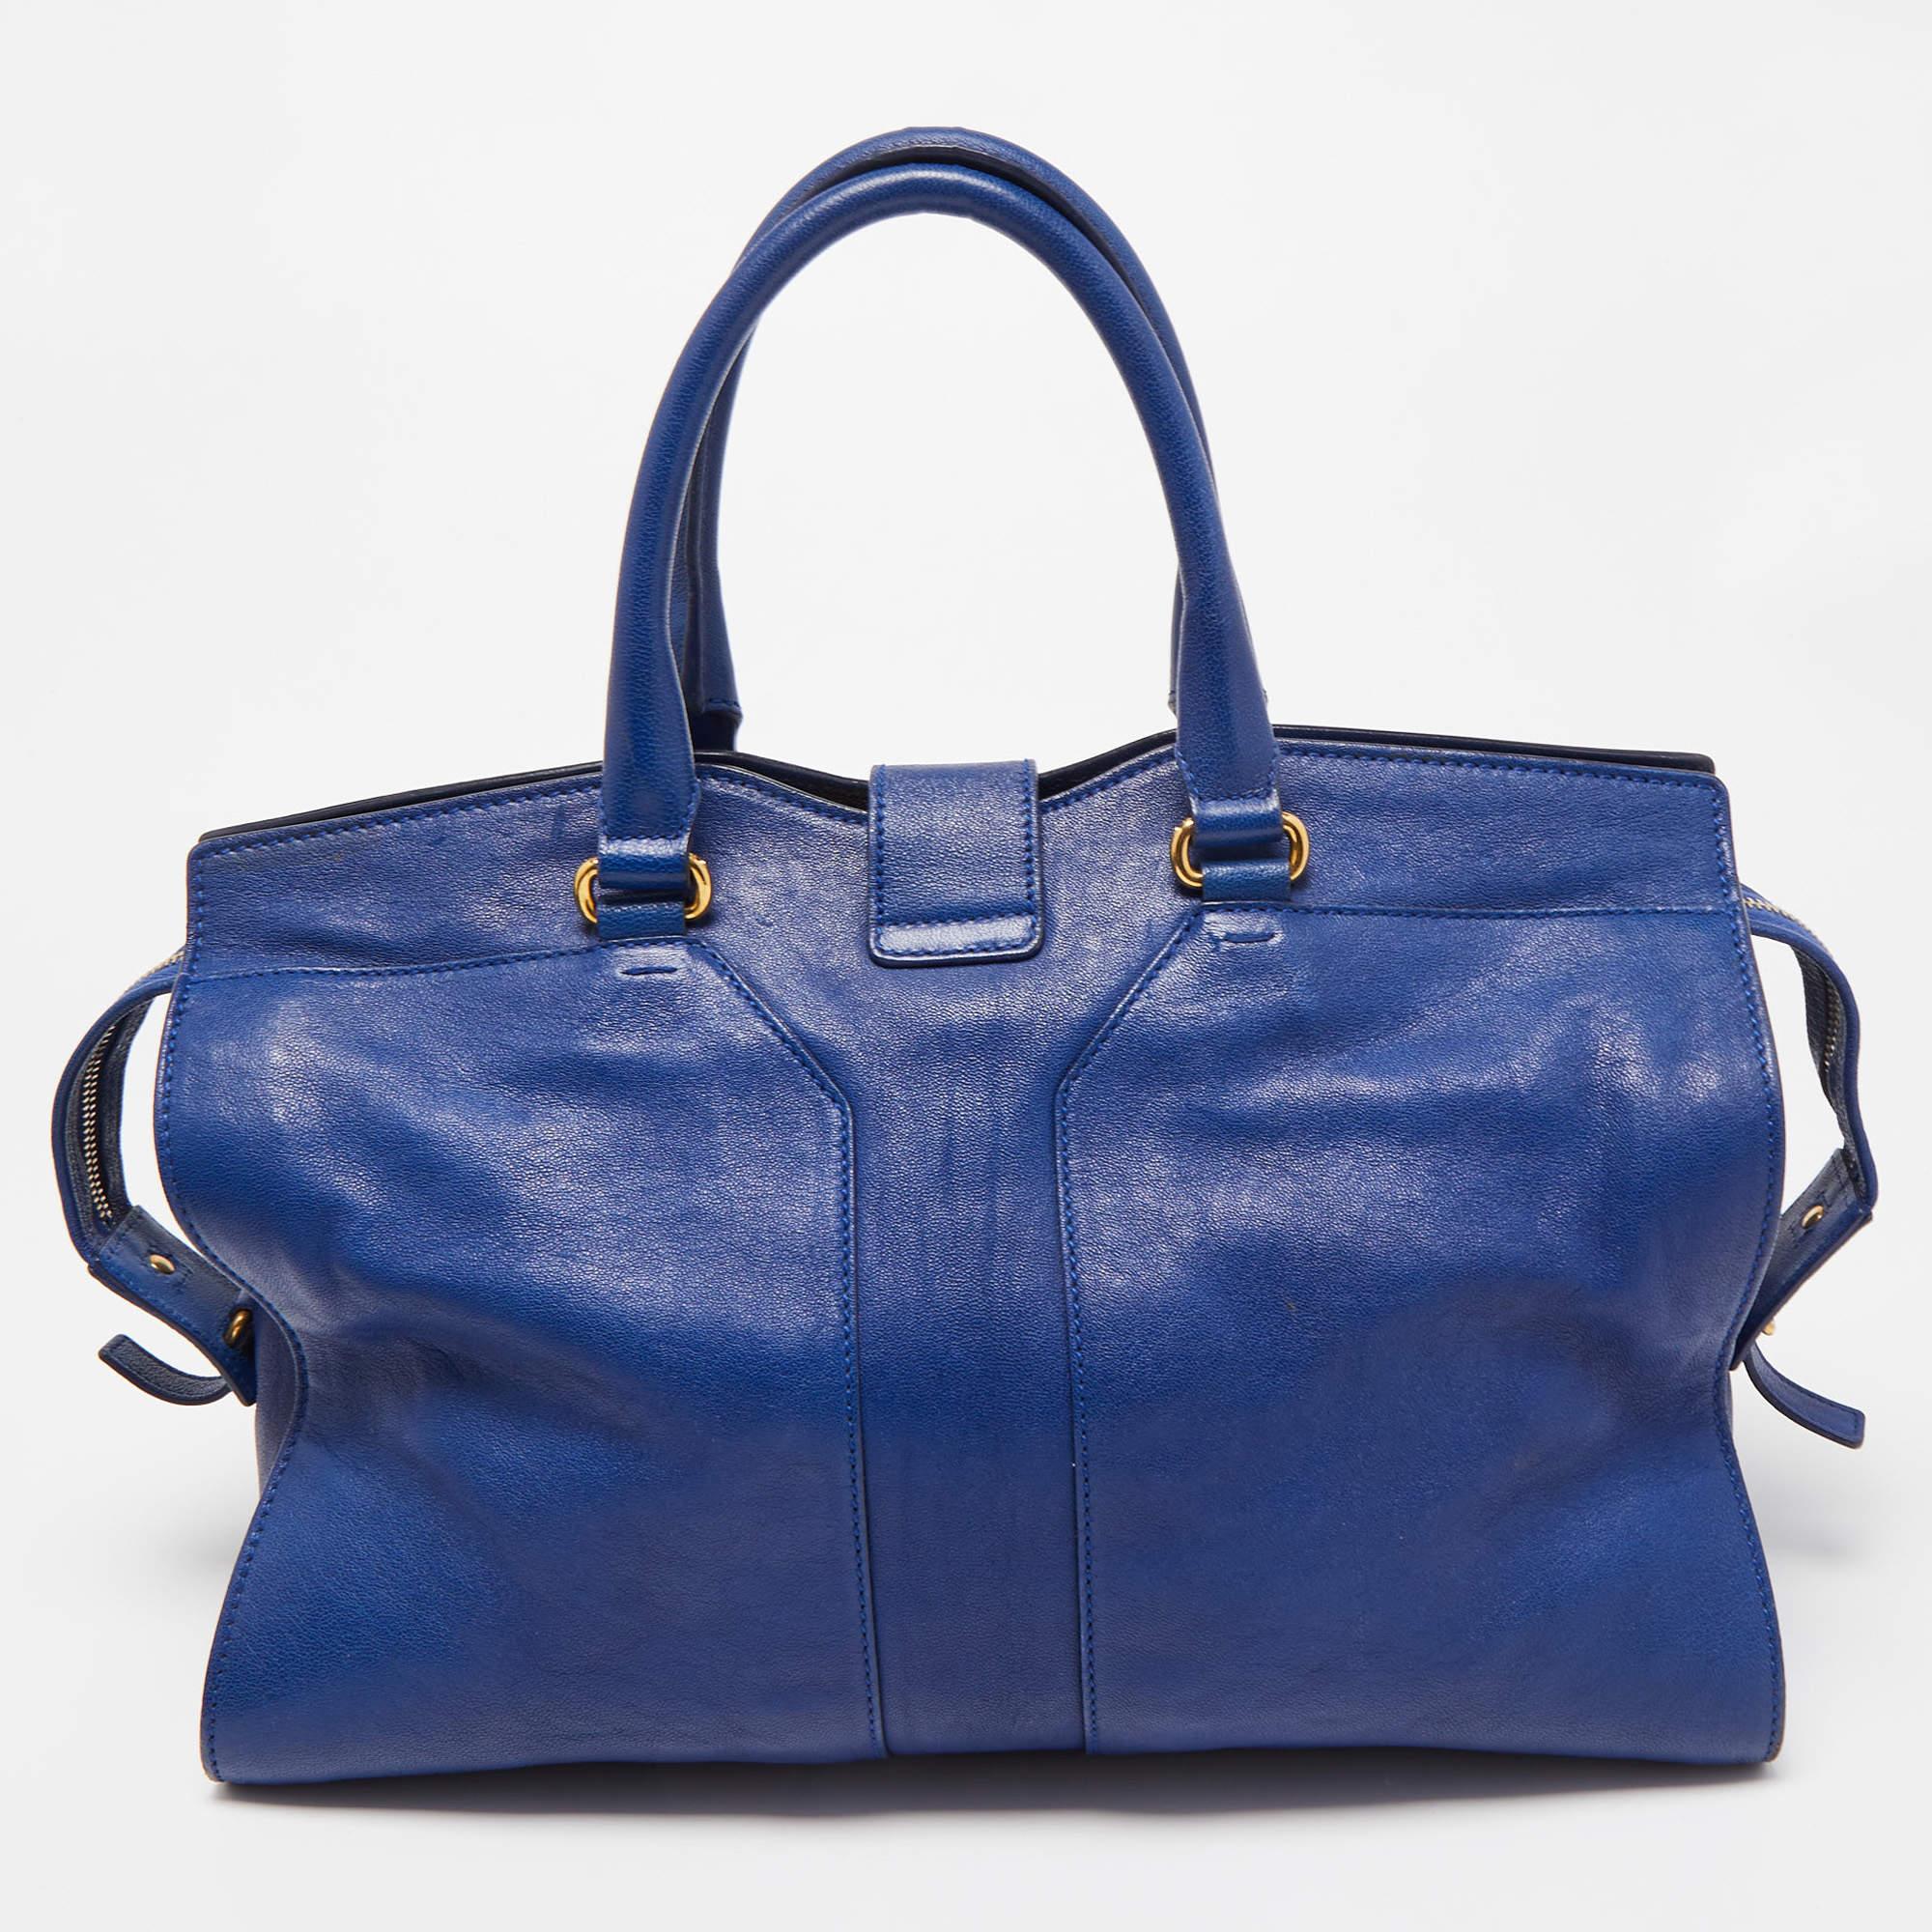 Yves Saint Laurent Blue Leather Medium Cabas Chyc Tote 12